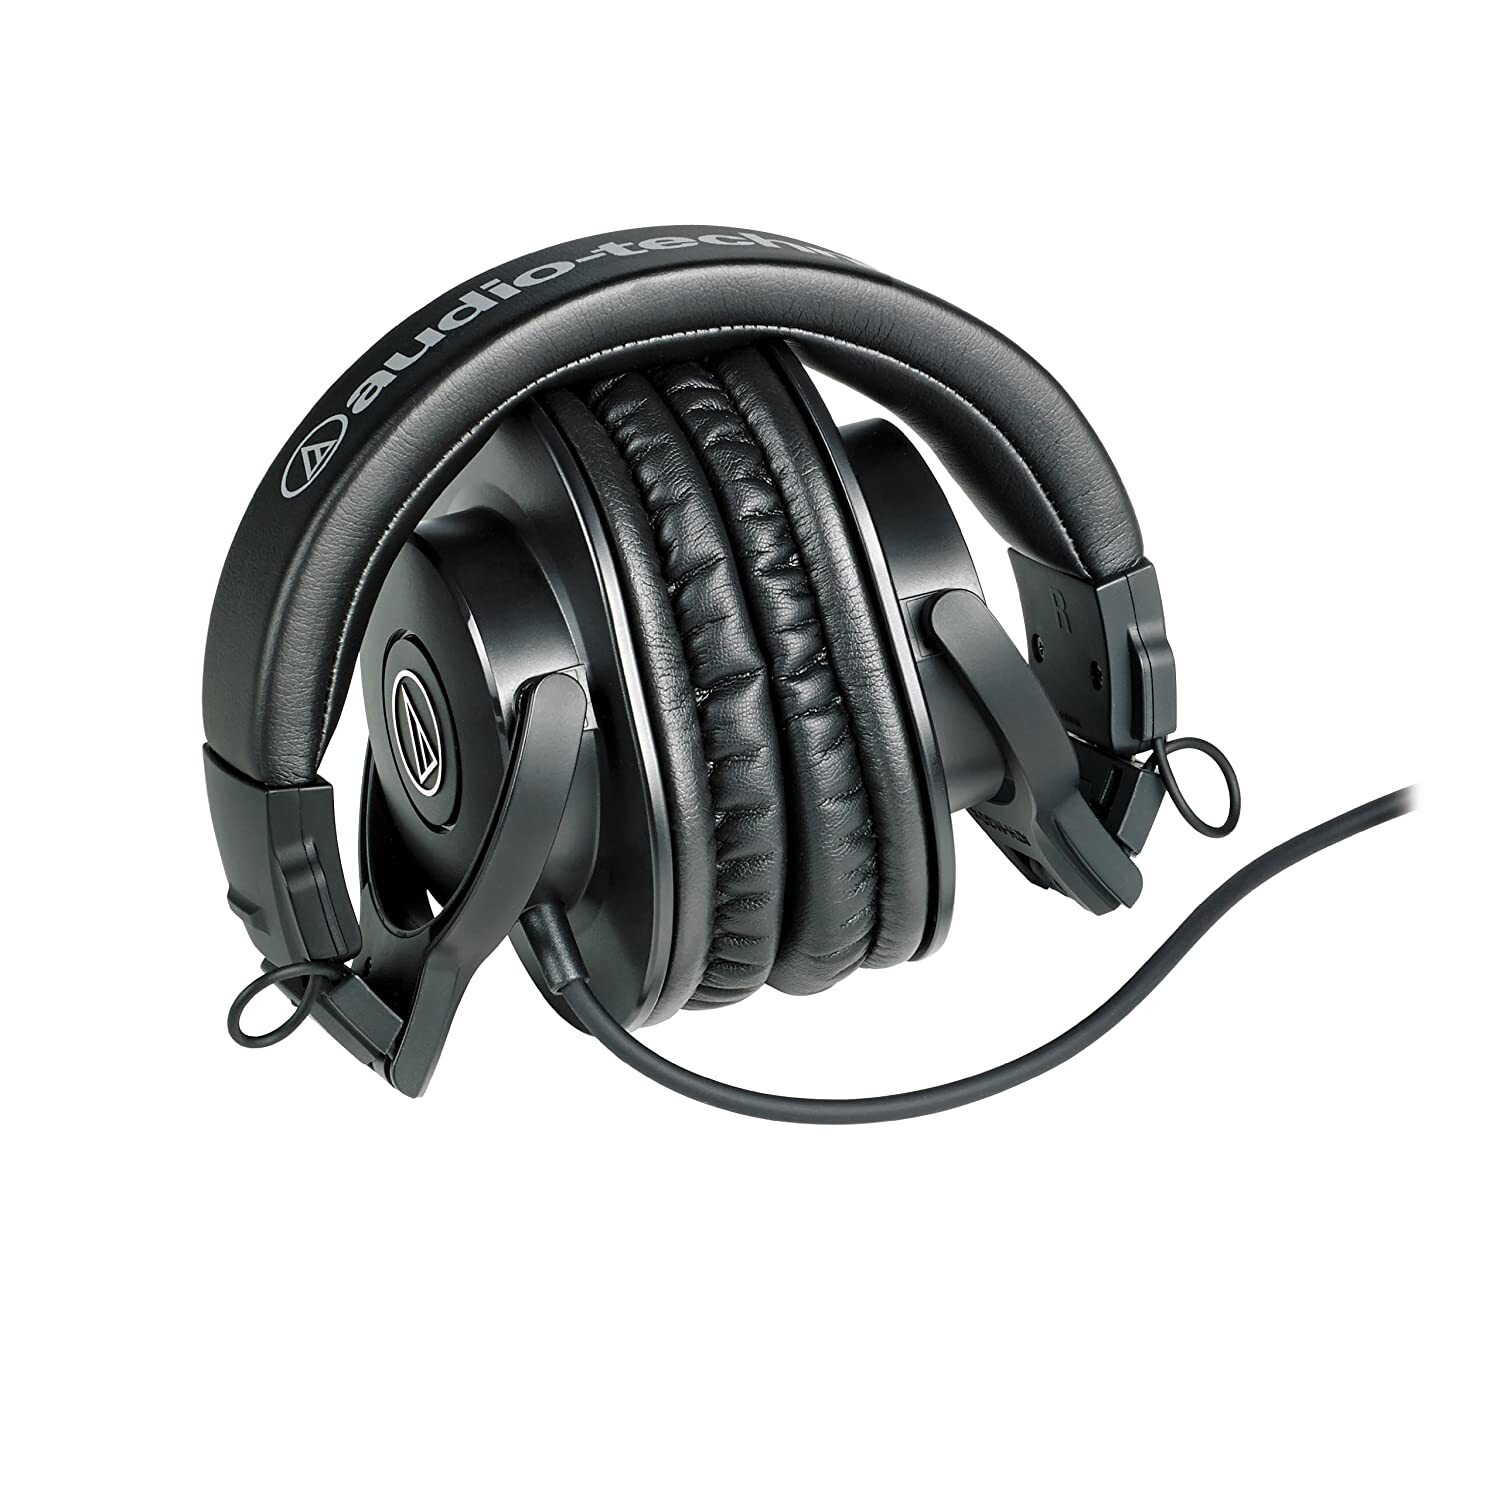 Audio-Technica ATH-M30X On-Ear Stereo Headphone, Black